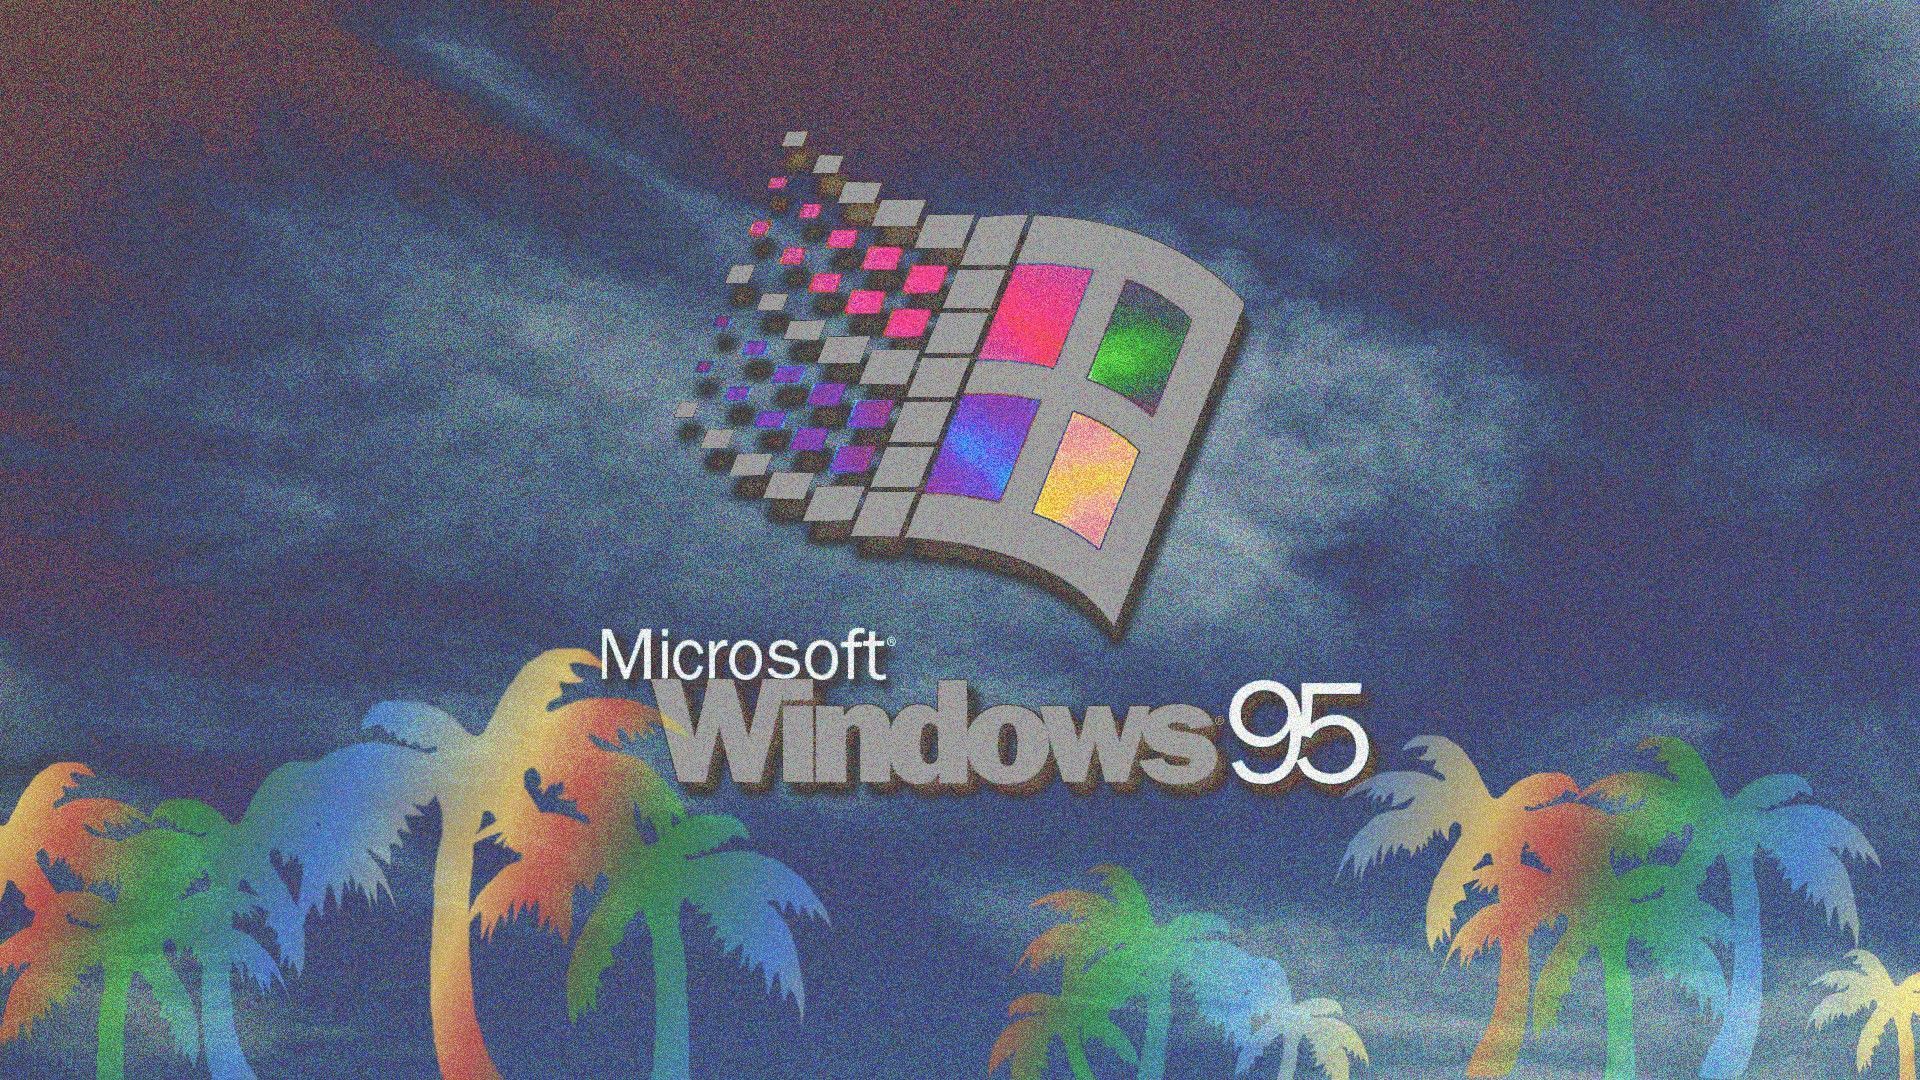 Windows 95 Aesthetic Wallpaper Free Windows 95 Aesthetic Background